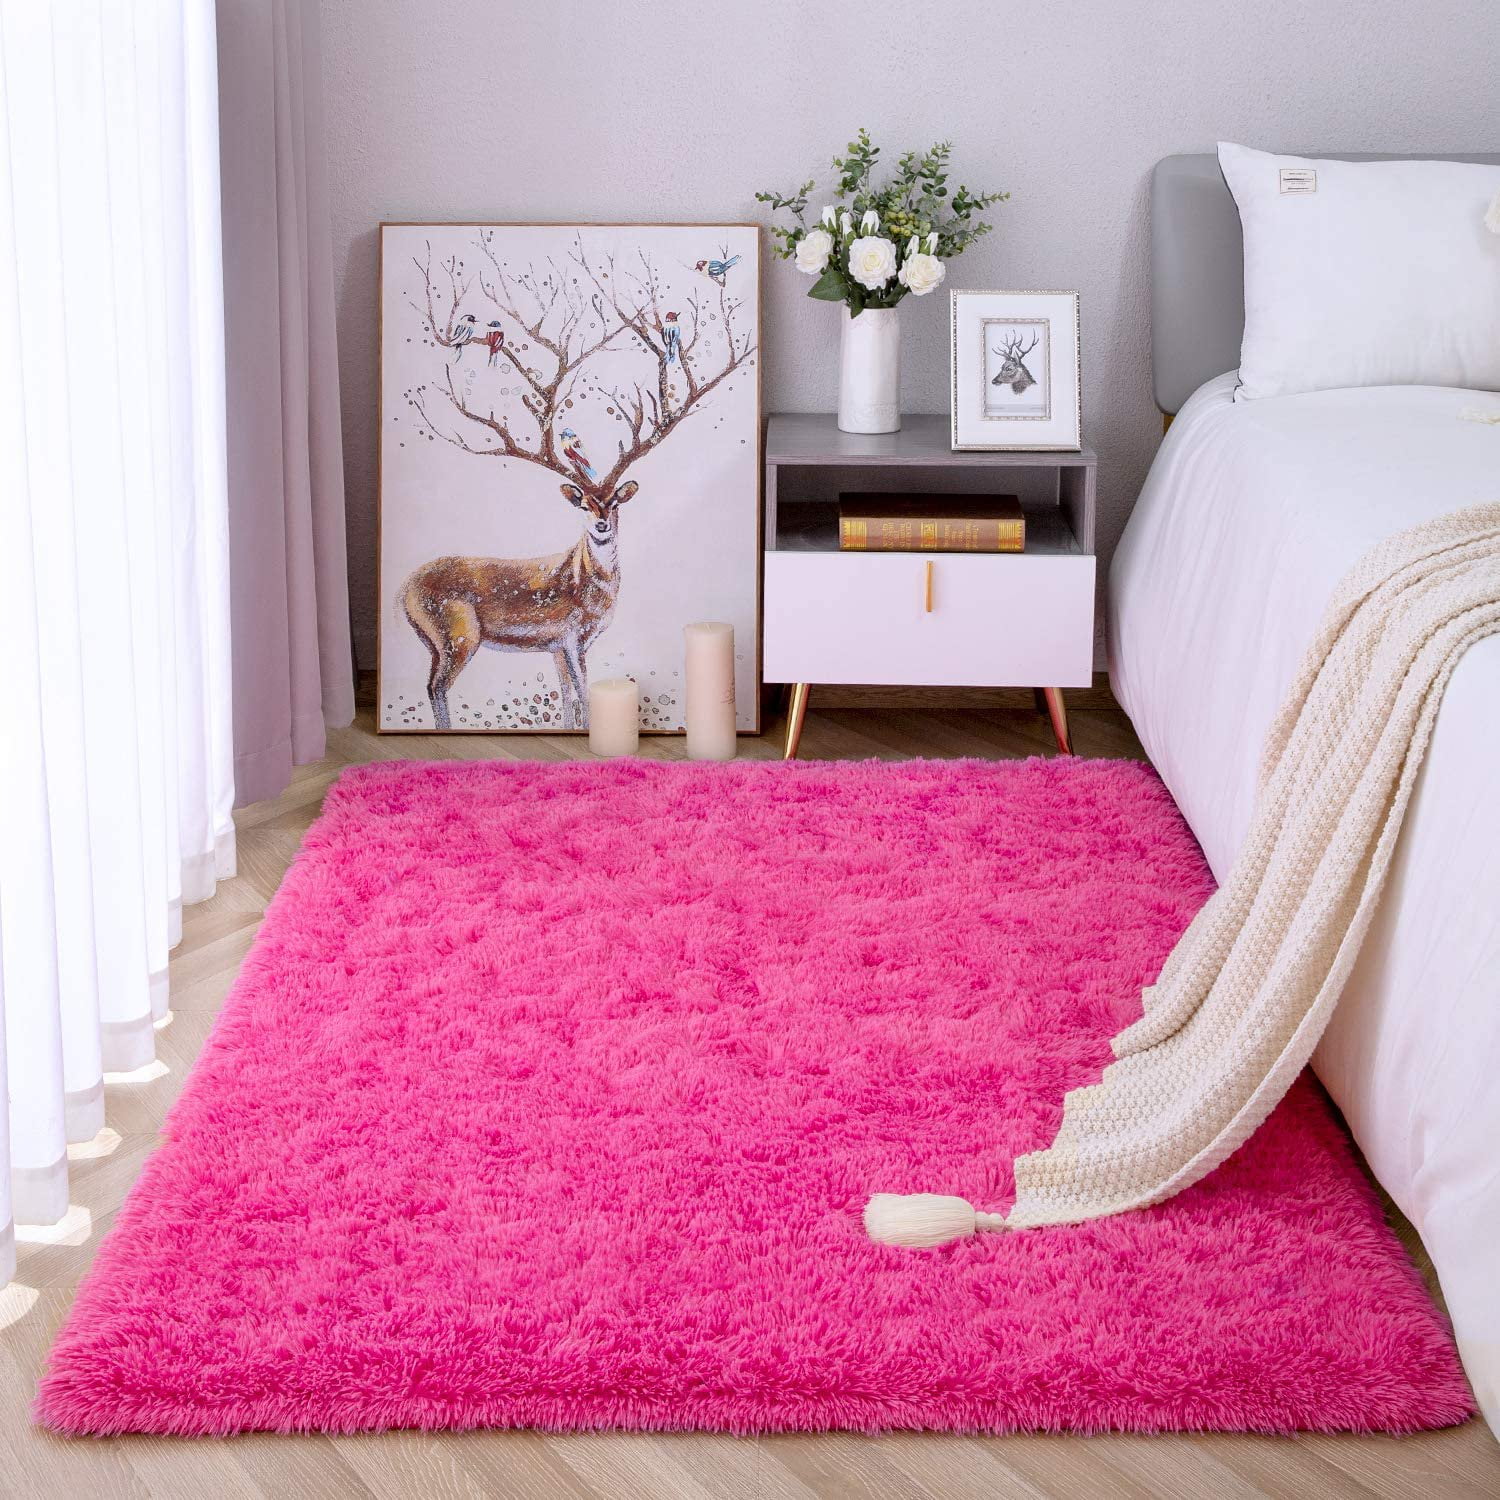  Ophanie Light Pink Area Rugs for Bedroom Girls, Fluffy Fuzzy  Furry Shag Carpet, Plush Soft Cute Kids Baby Shaggy Bedside 4x5.3 Indoor  Floor Rug for Teen Dorm Home Decor Aesthetic, Nursery 